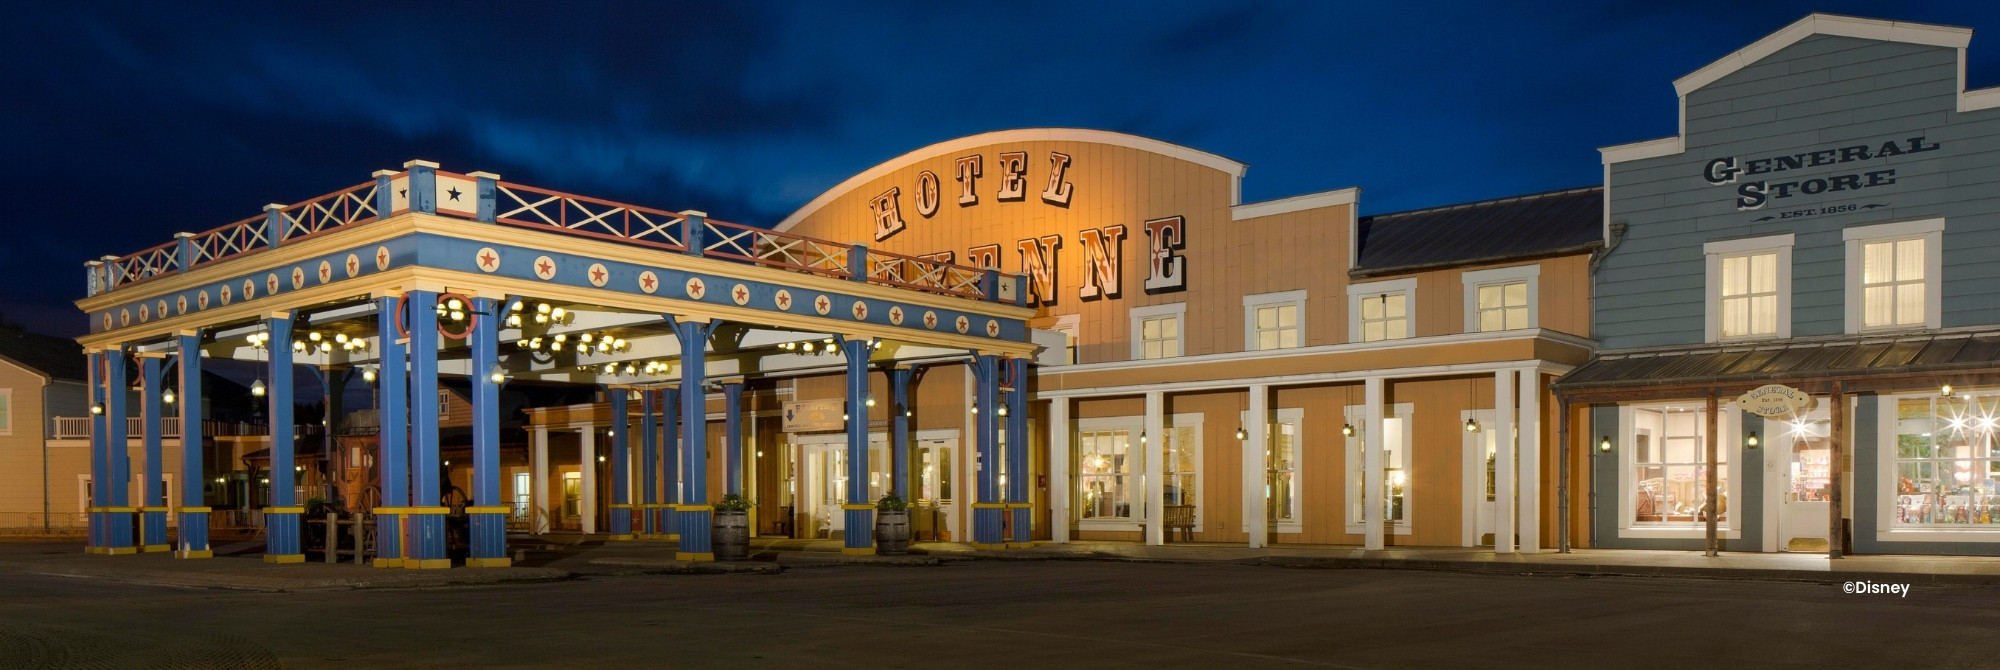 Entree Disney's Hotel Cheyenne